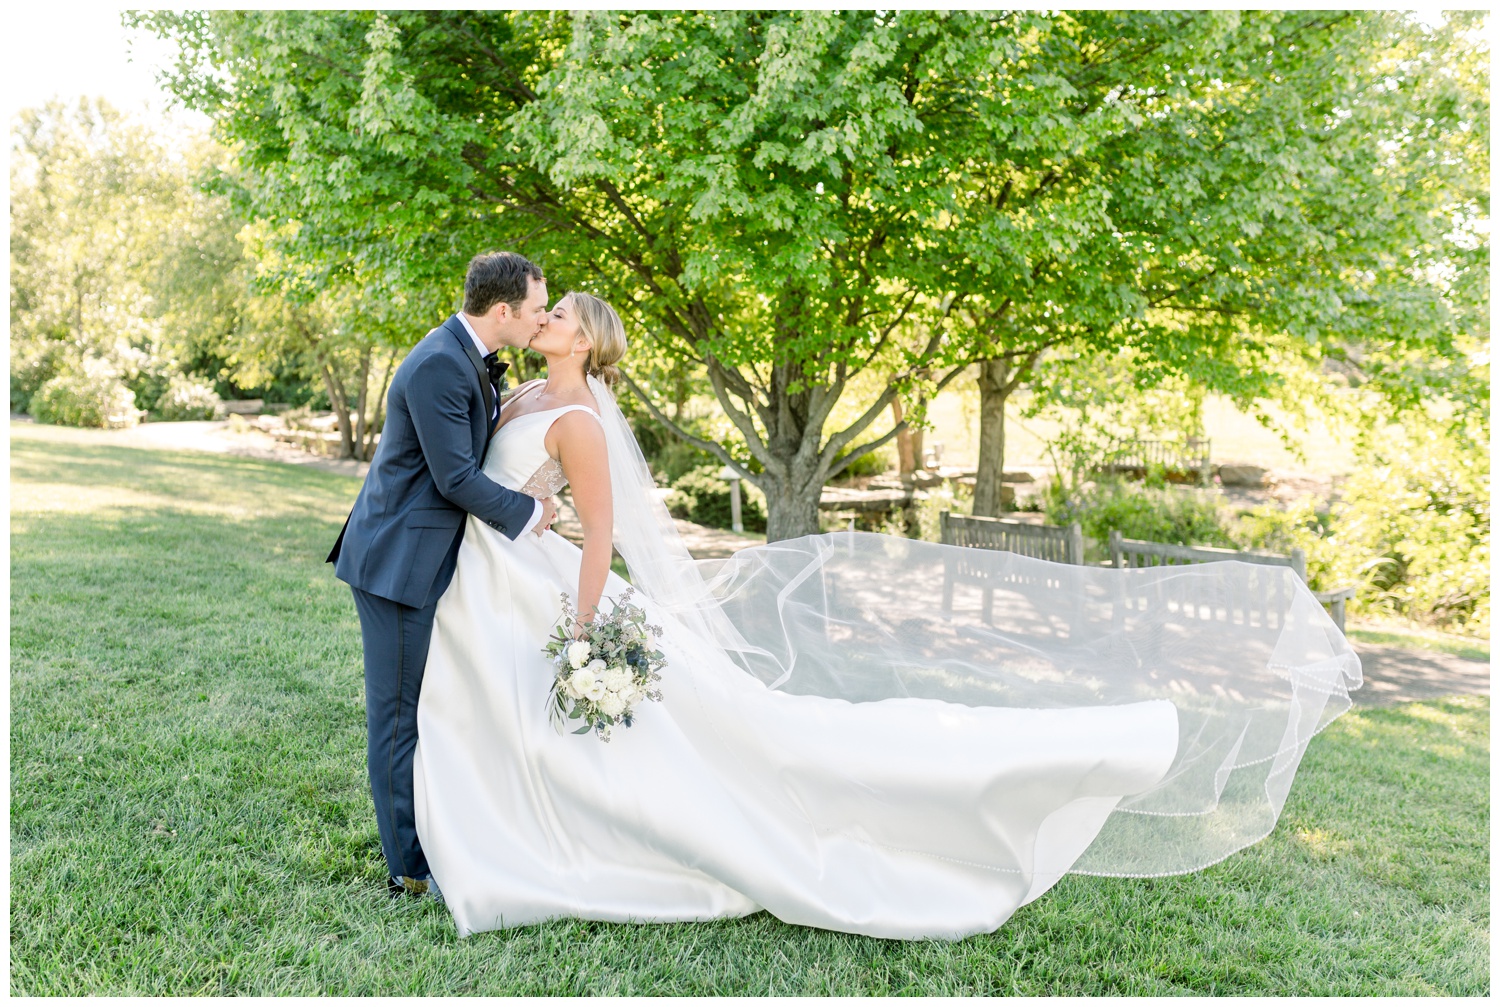 Veil Drop at Cox Arboretum - Dayton Wedding Photographer at The Steam Plant